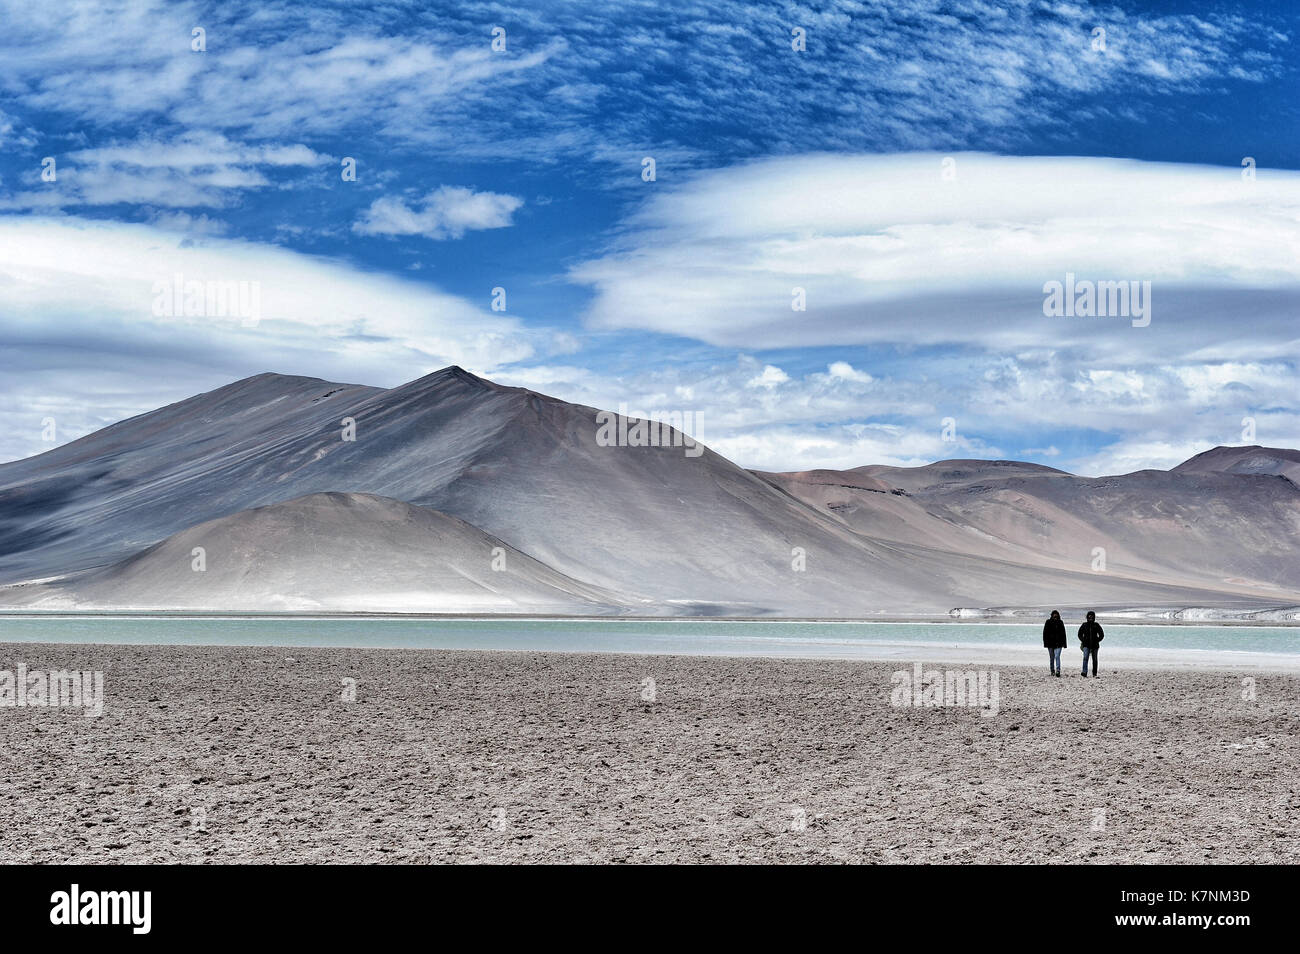 Two people admiring the view at Salar de Aguas Calientes, aka as Salar de Talar, Chile Stock Photo